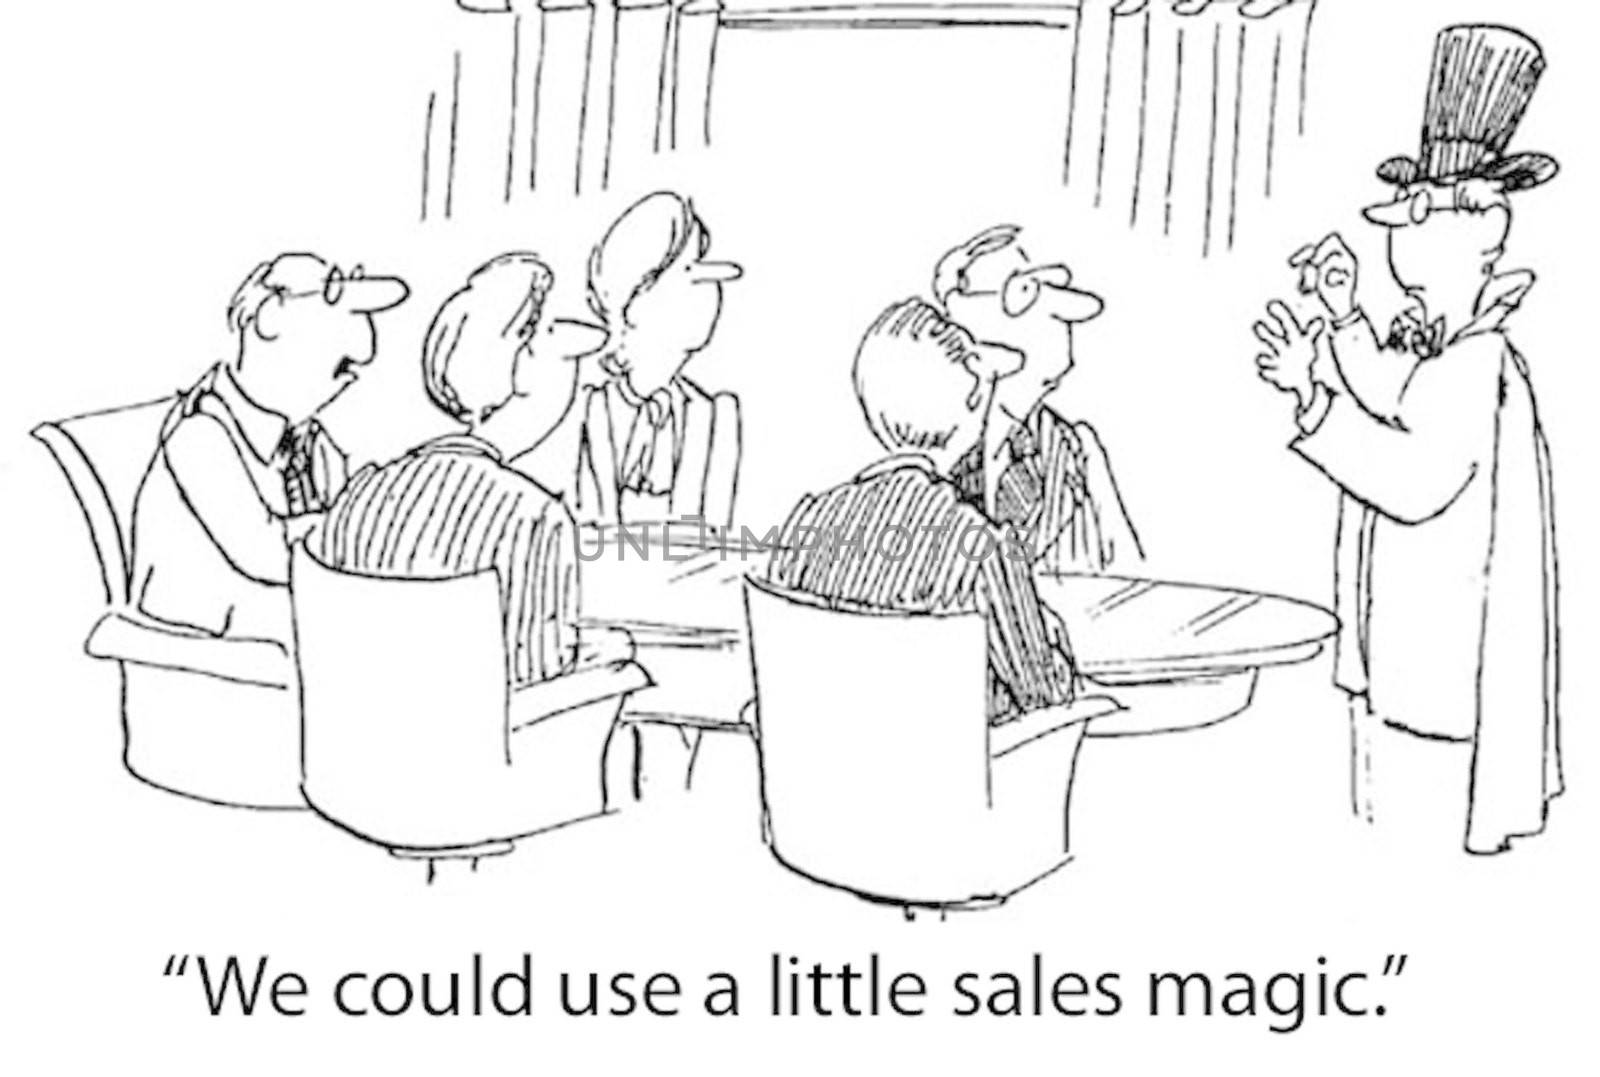 Sales Magic by andrewgenn